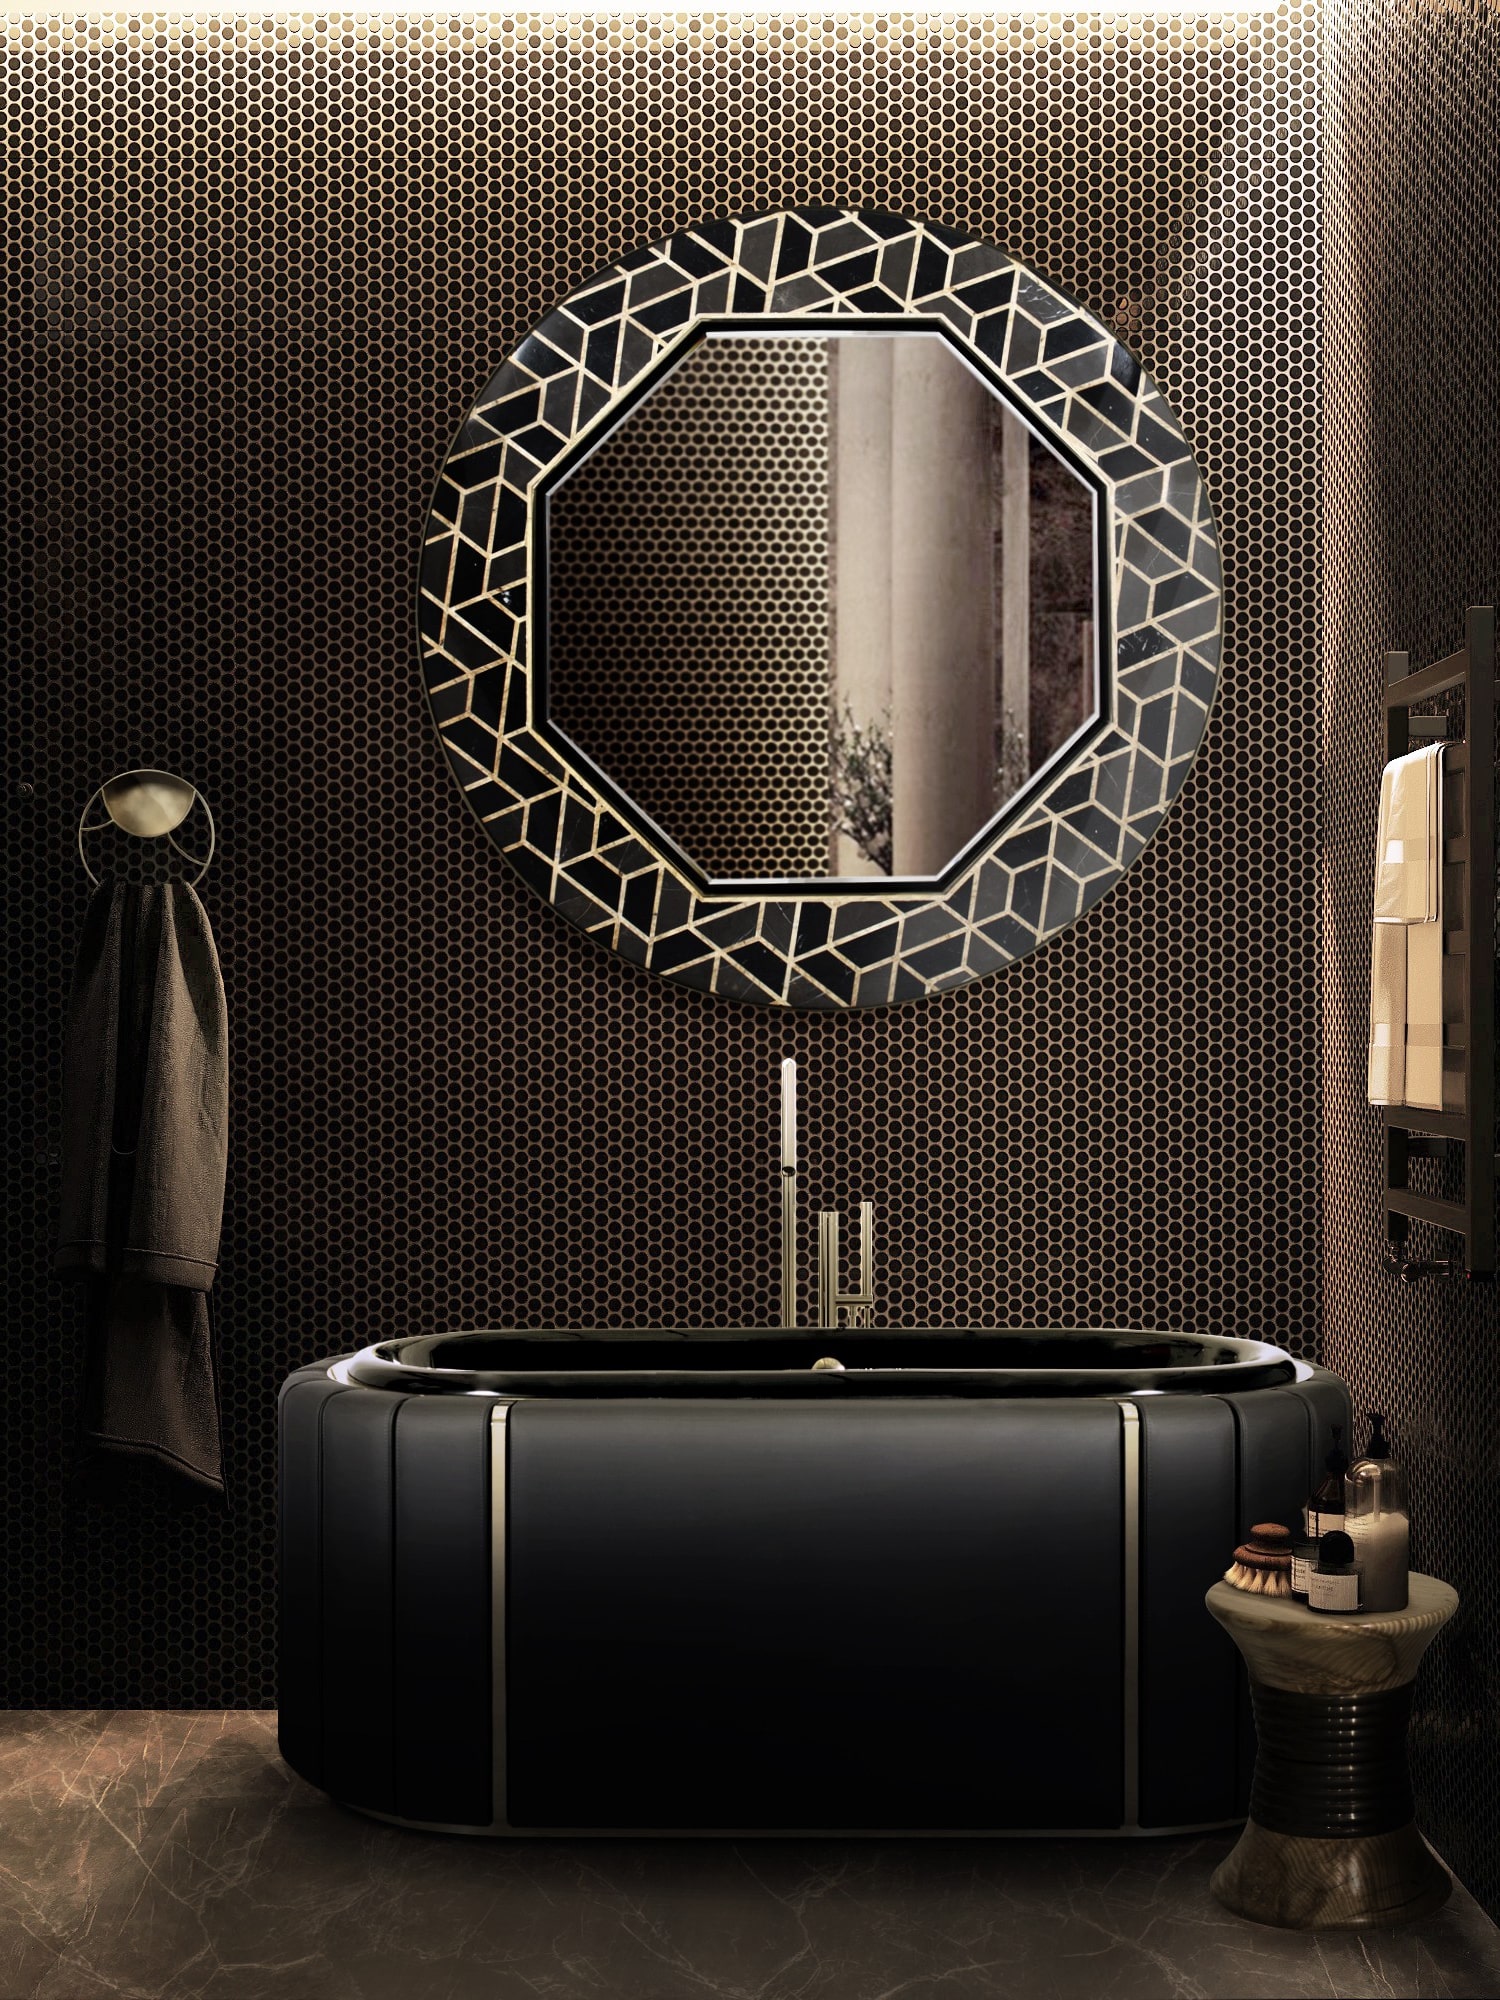 Modern Classic Bathroom Design with Round Mirror and Black Bathtub - Home'Society